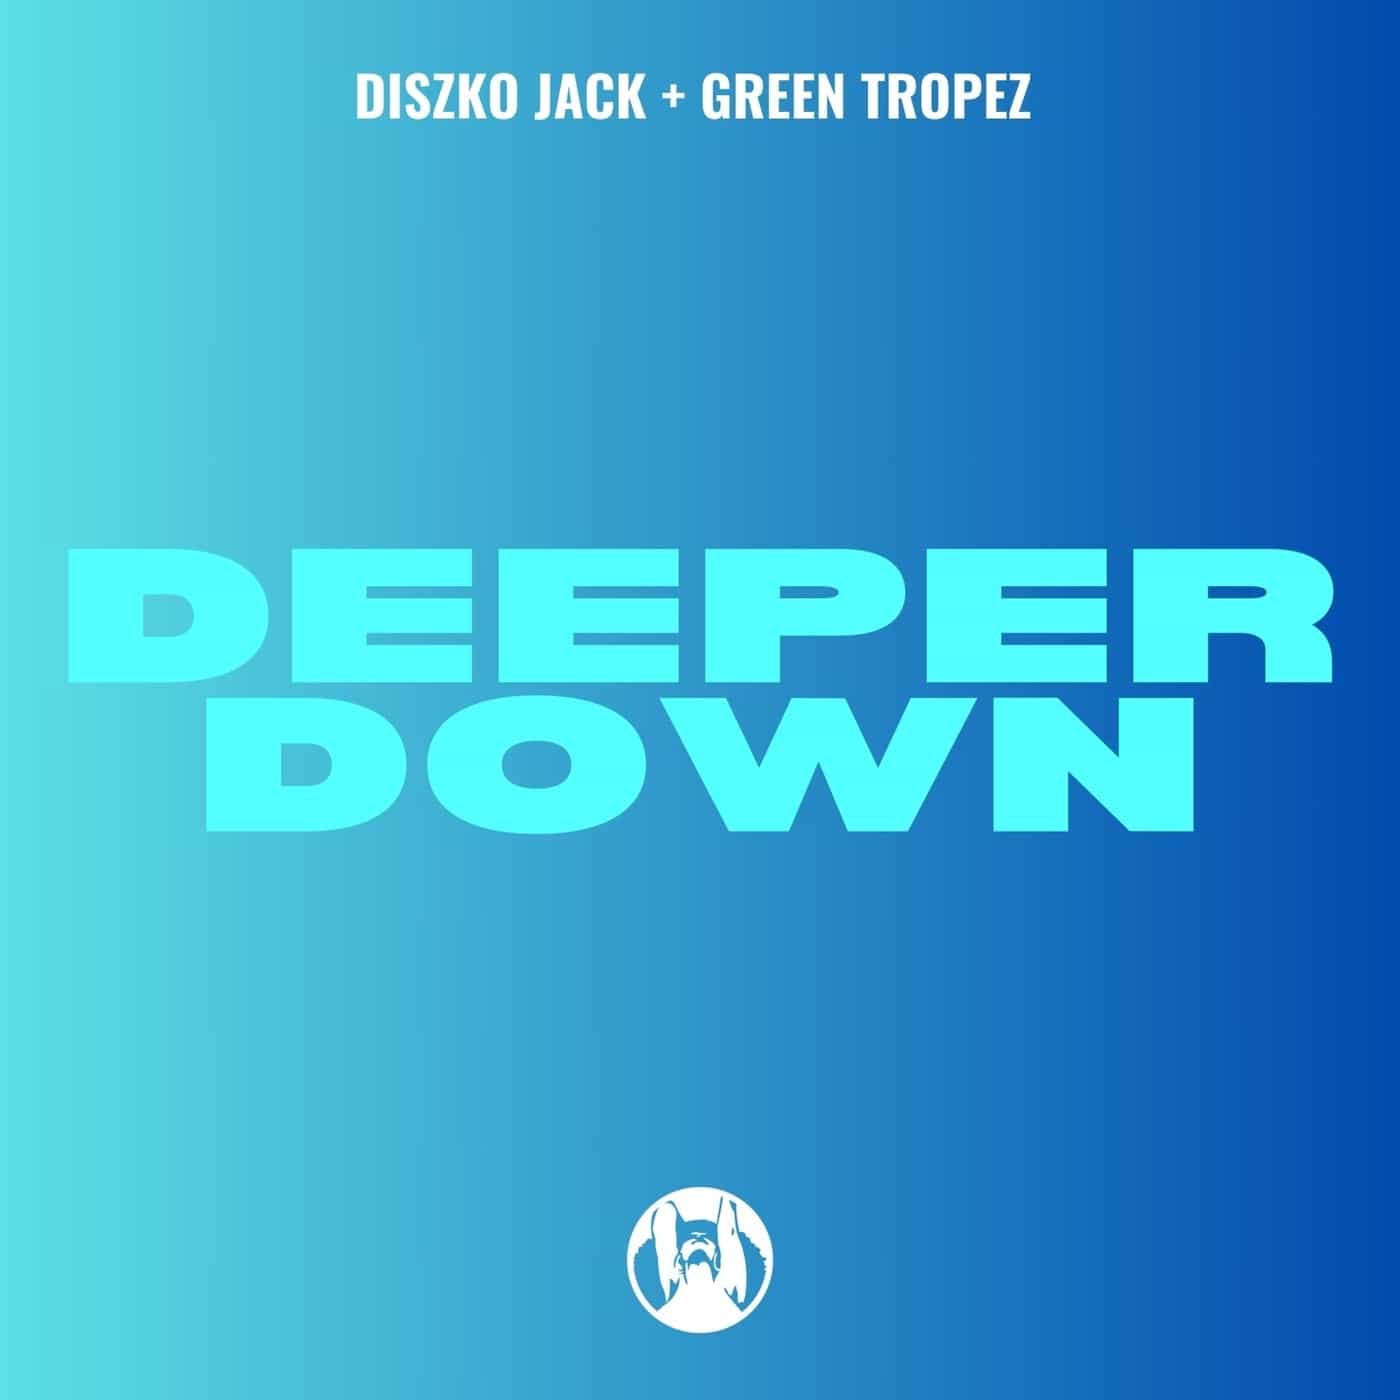 image cover: Diszko Jack, Green Tropez - Deeper Down (Original Mix) on PornoStar Records